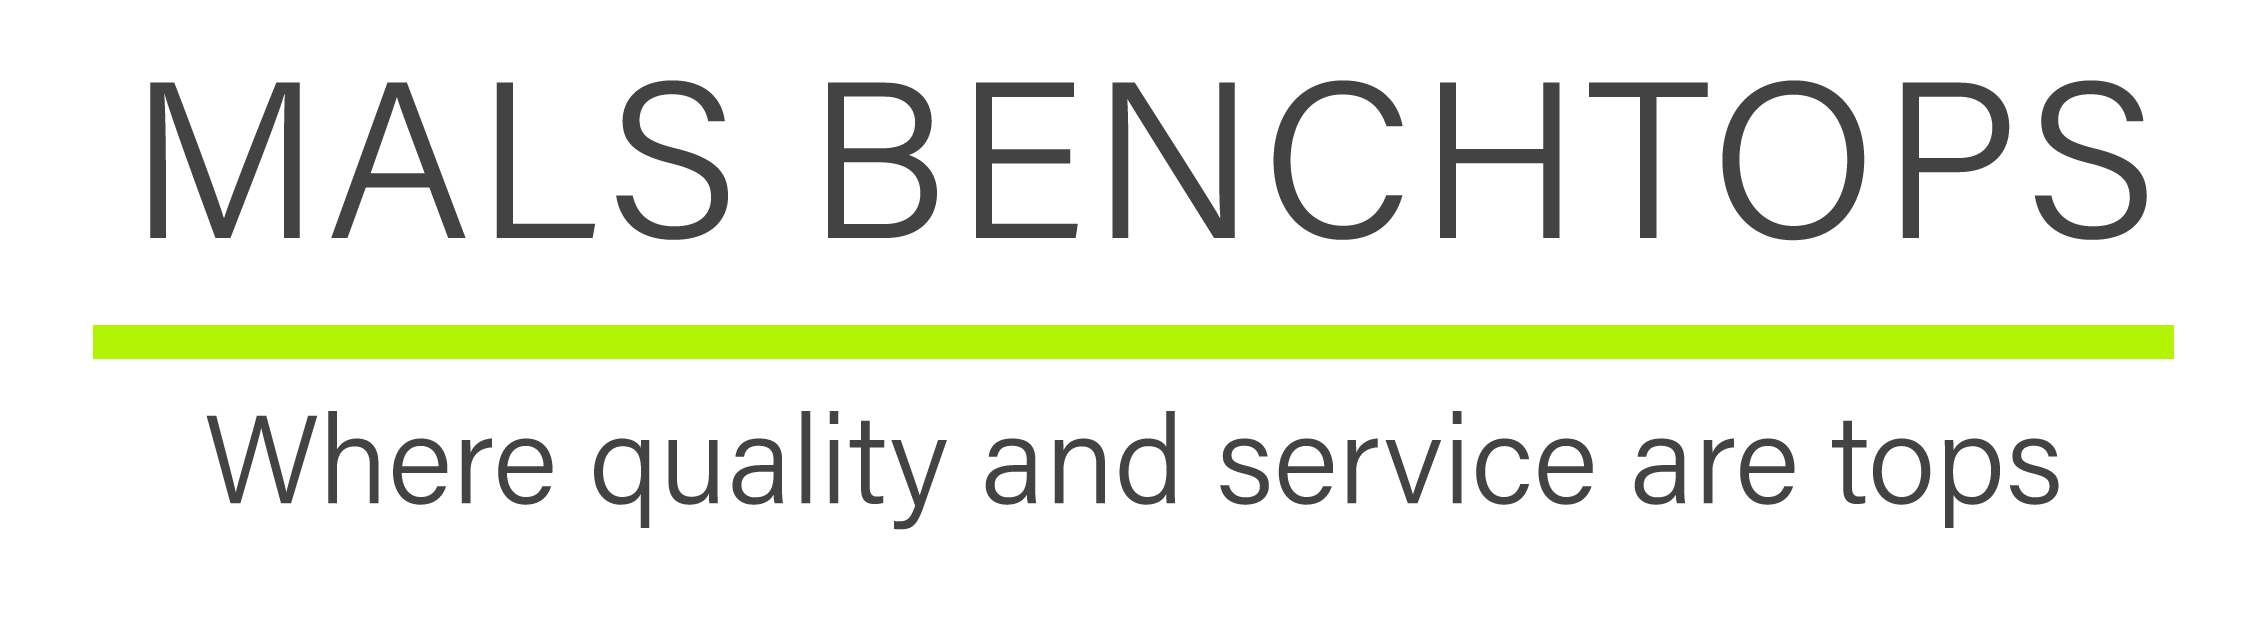 mals-benchtops-logo-tpb.png